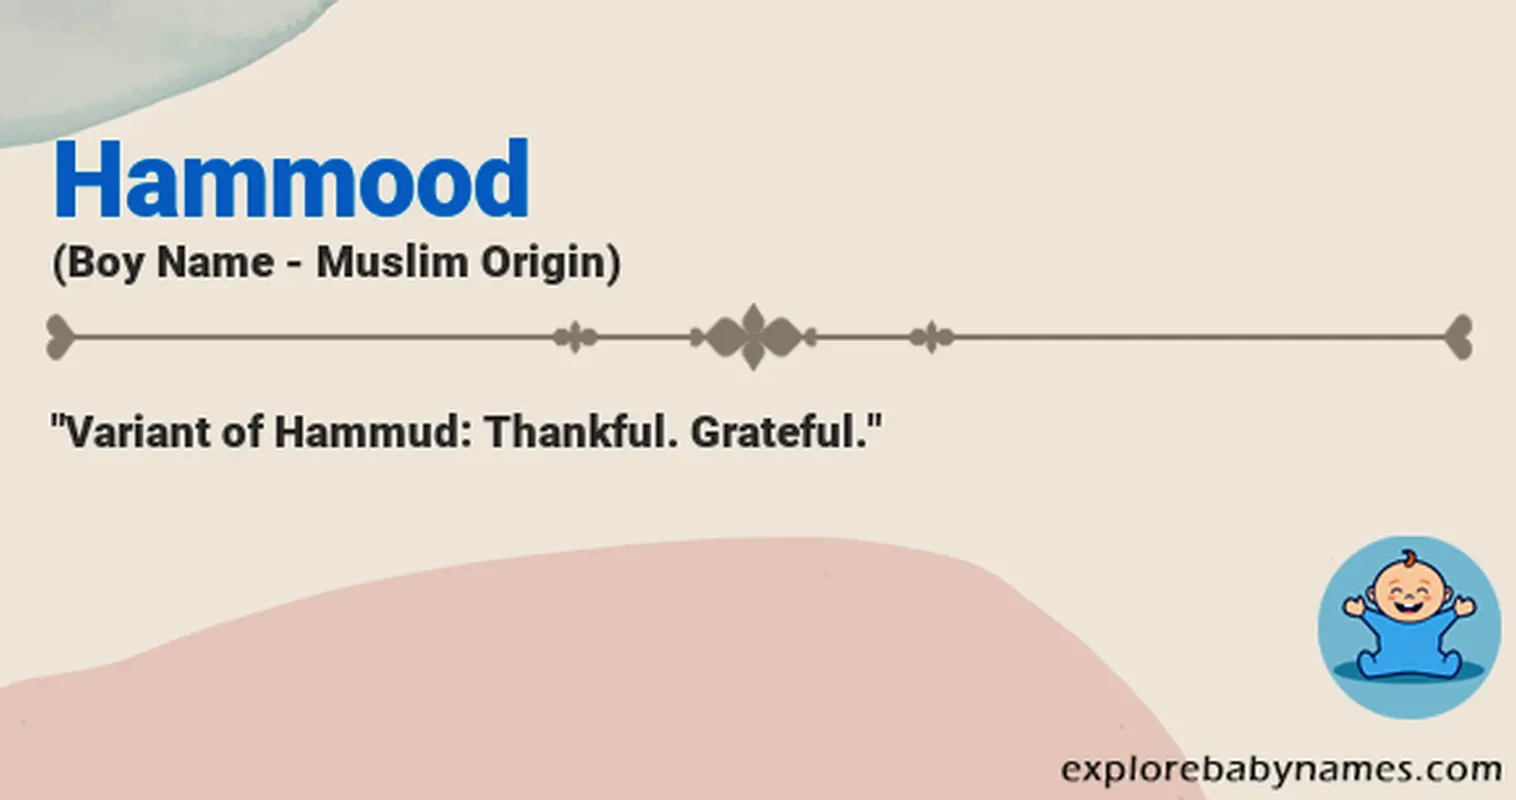 Meaning of Hammood